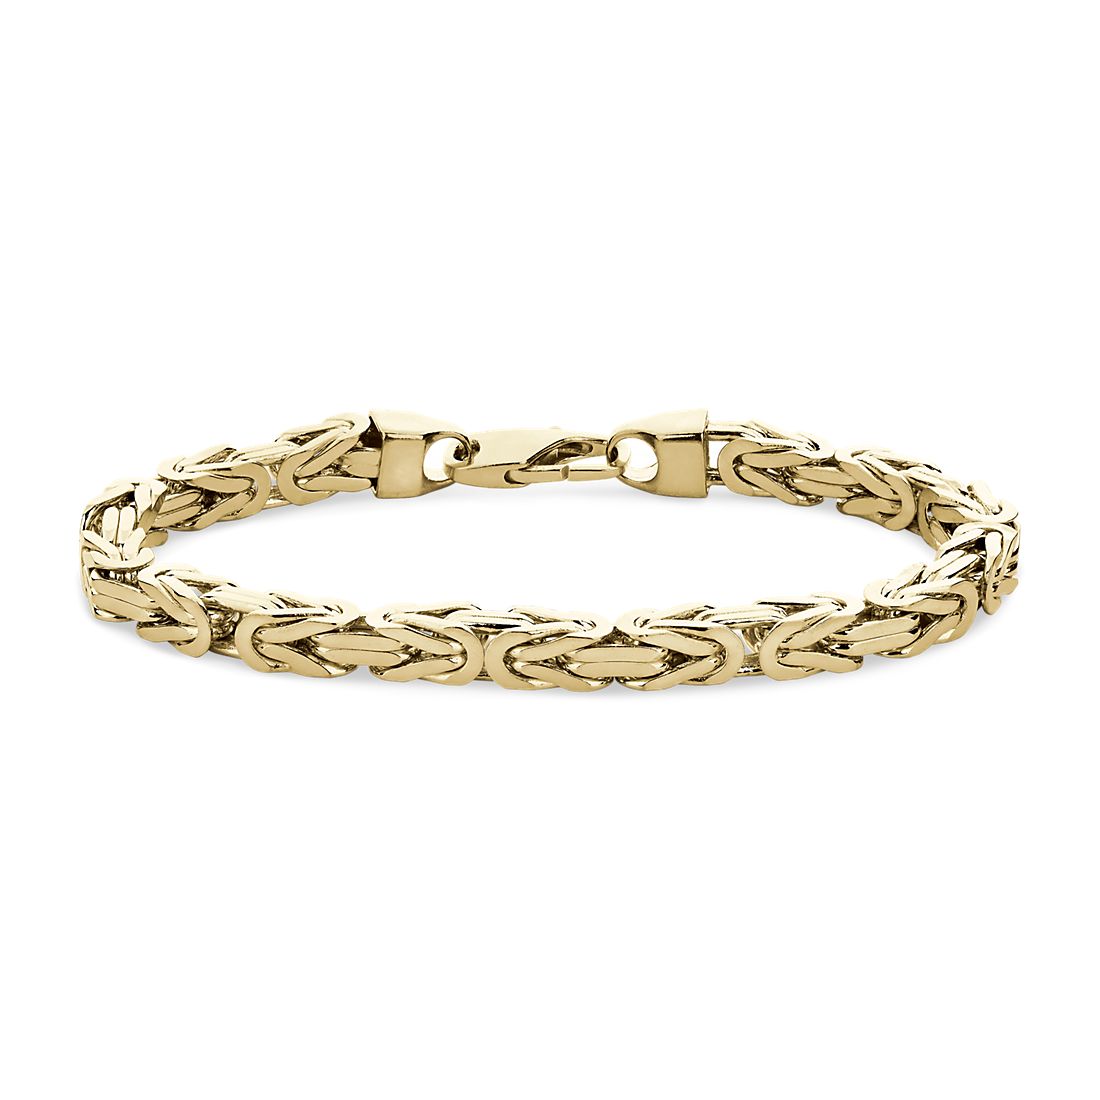 8" Men's Byzantine Chain Bracelet in 14k Yellow Gold (5.25 mm)